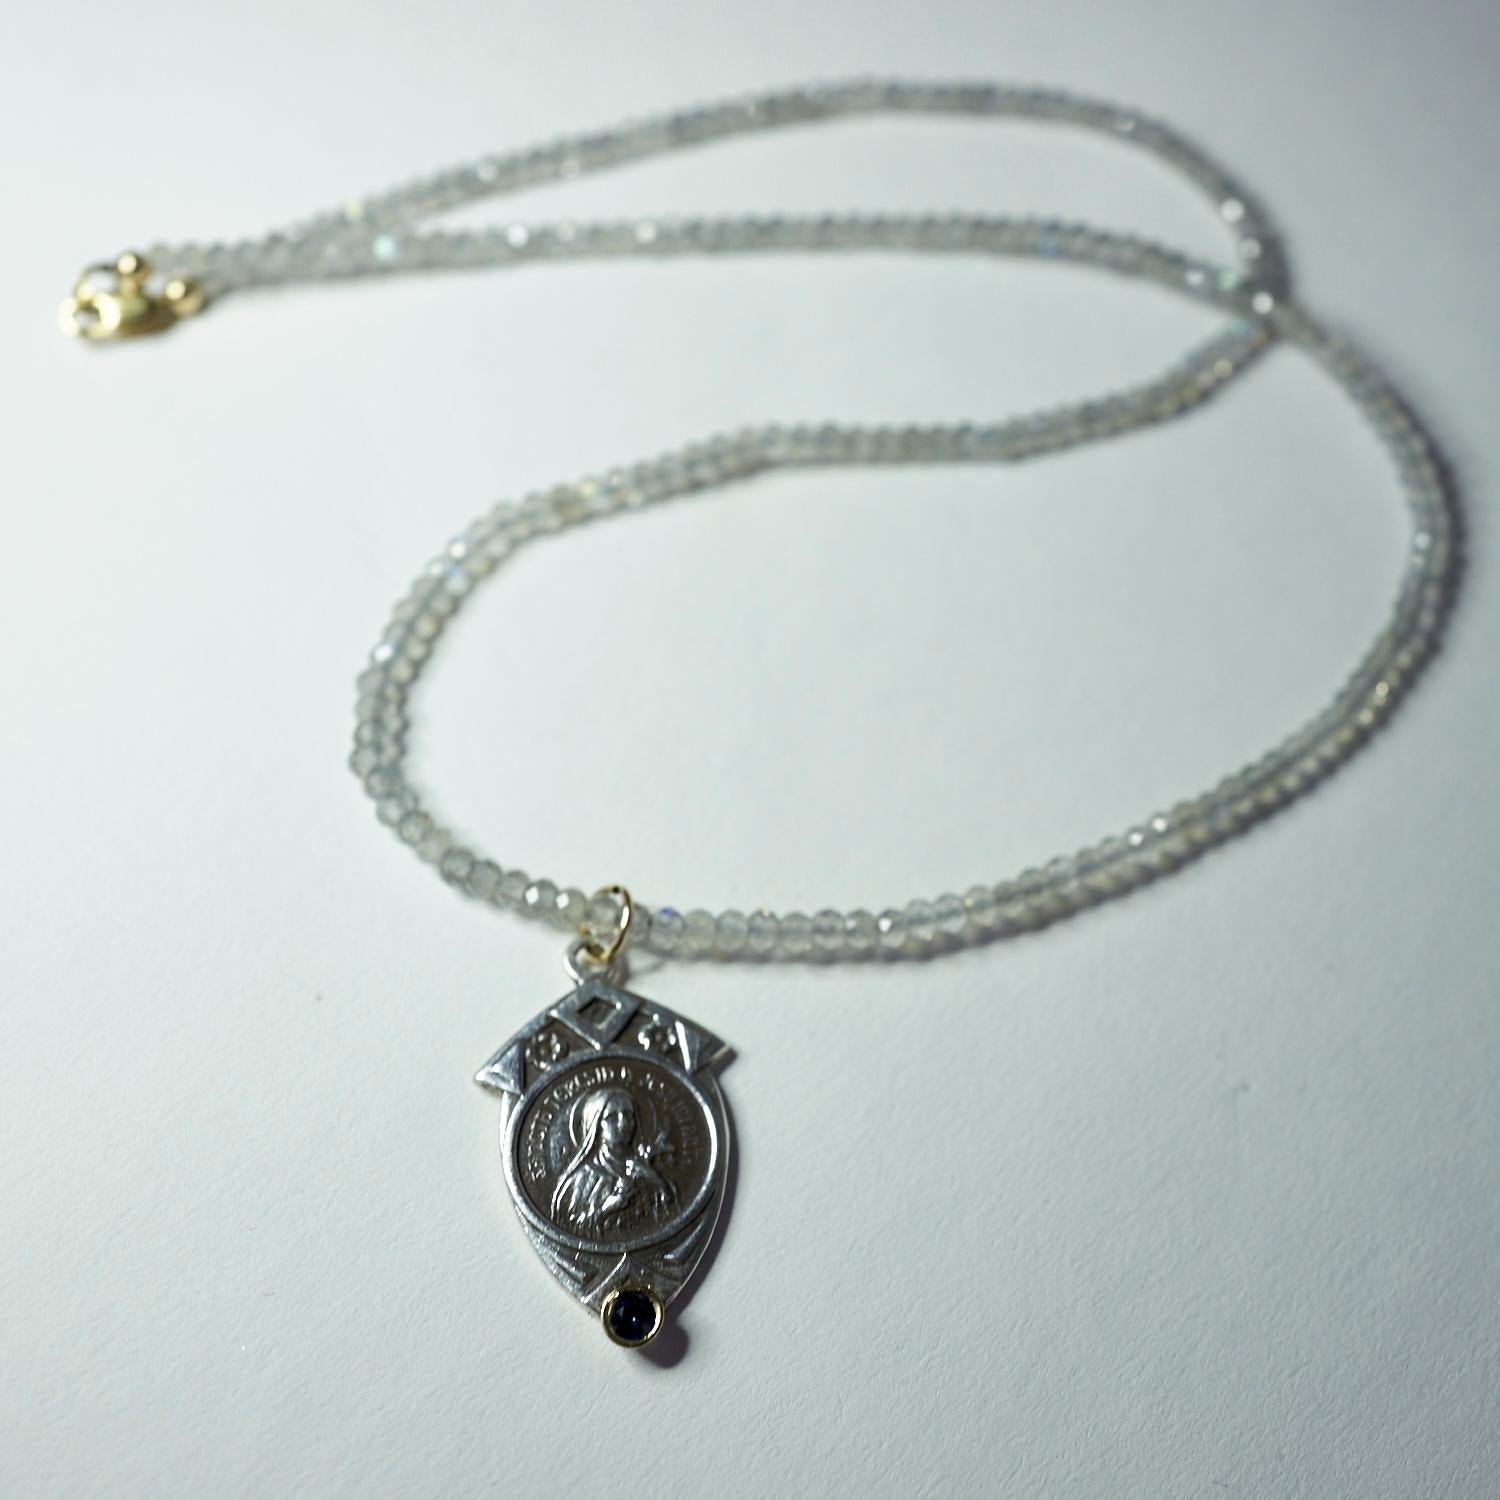 virgin mary coin necklace